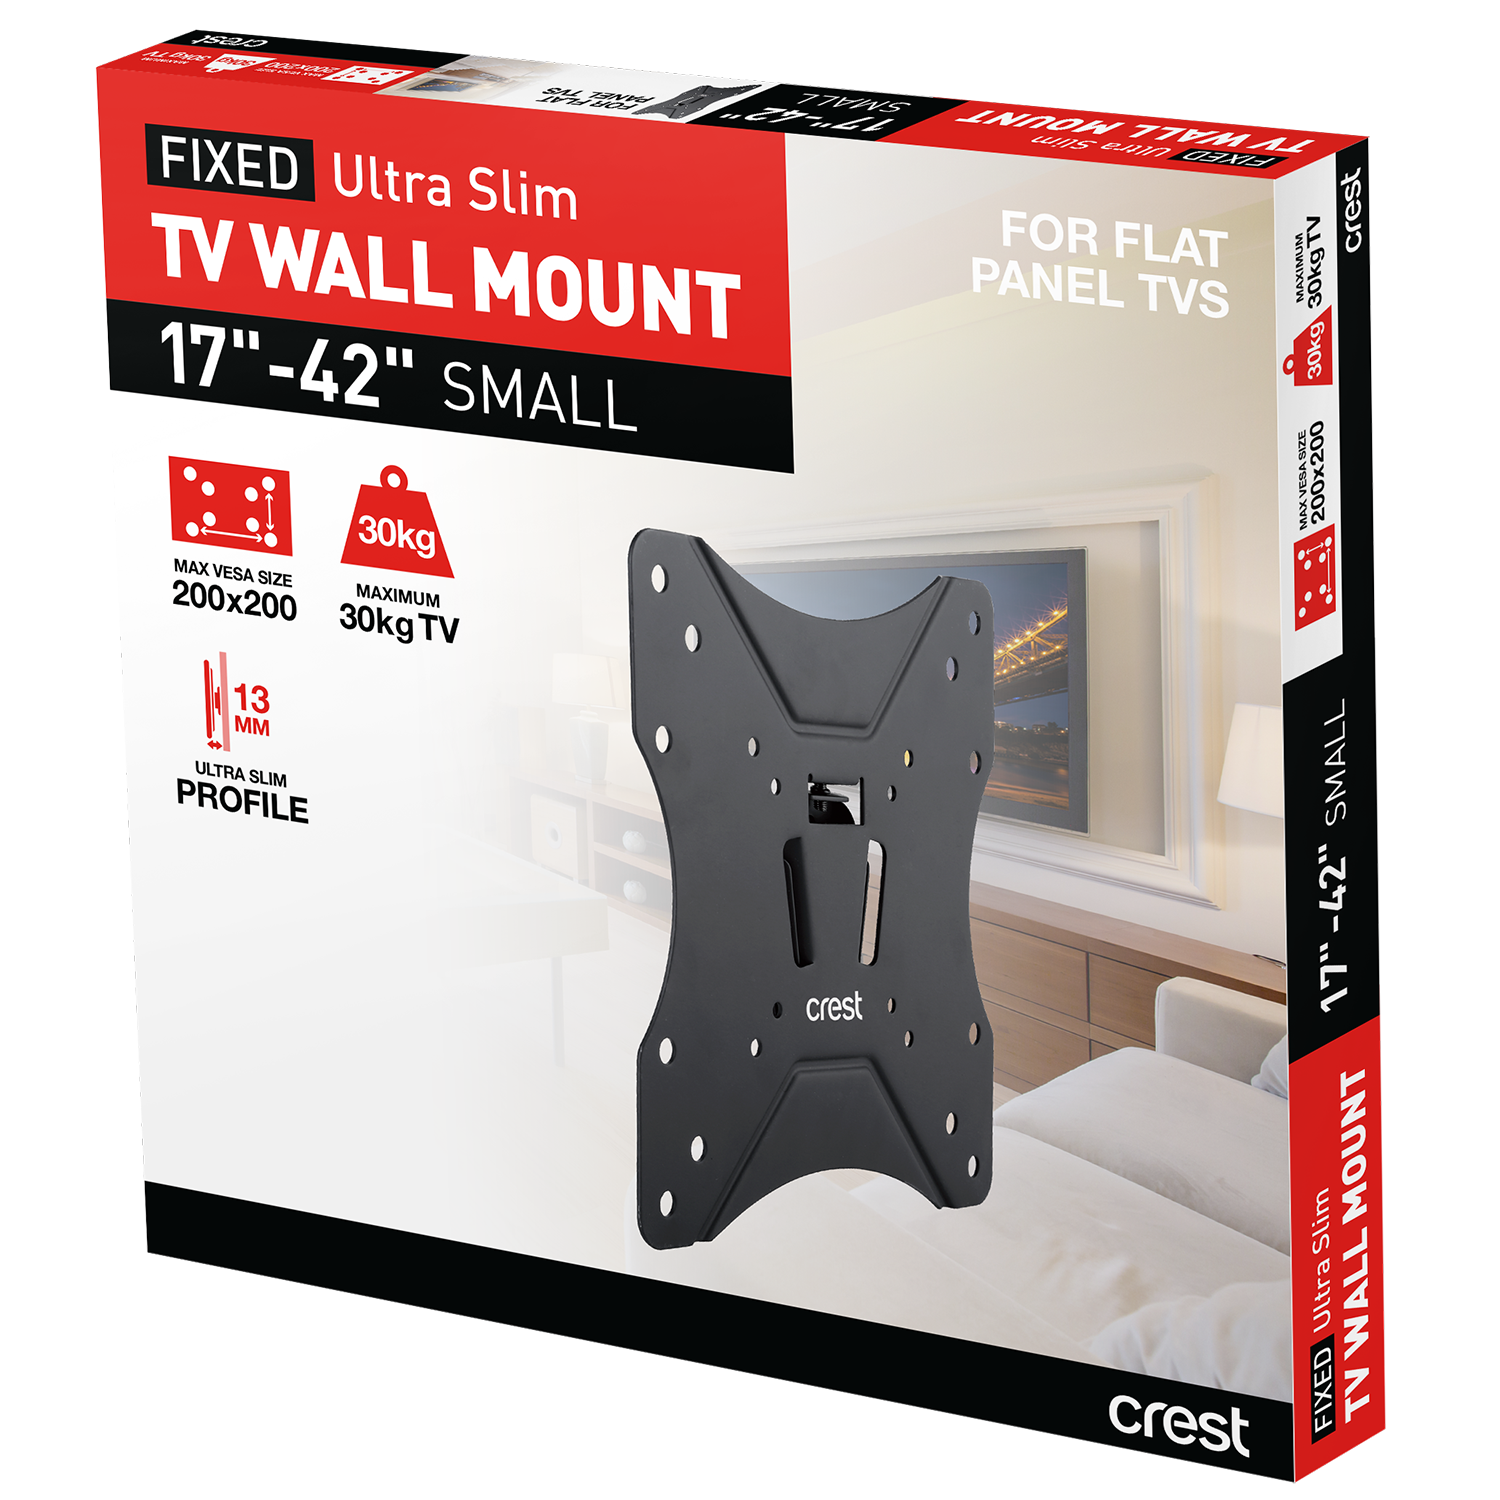 Fixed TV Wall Mount Ultra Slim - 17" -  42"